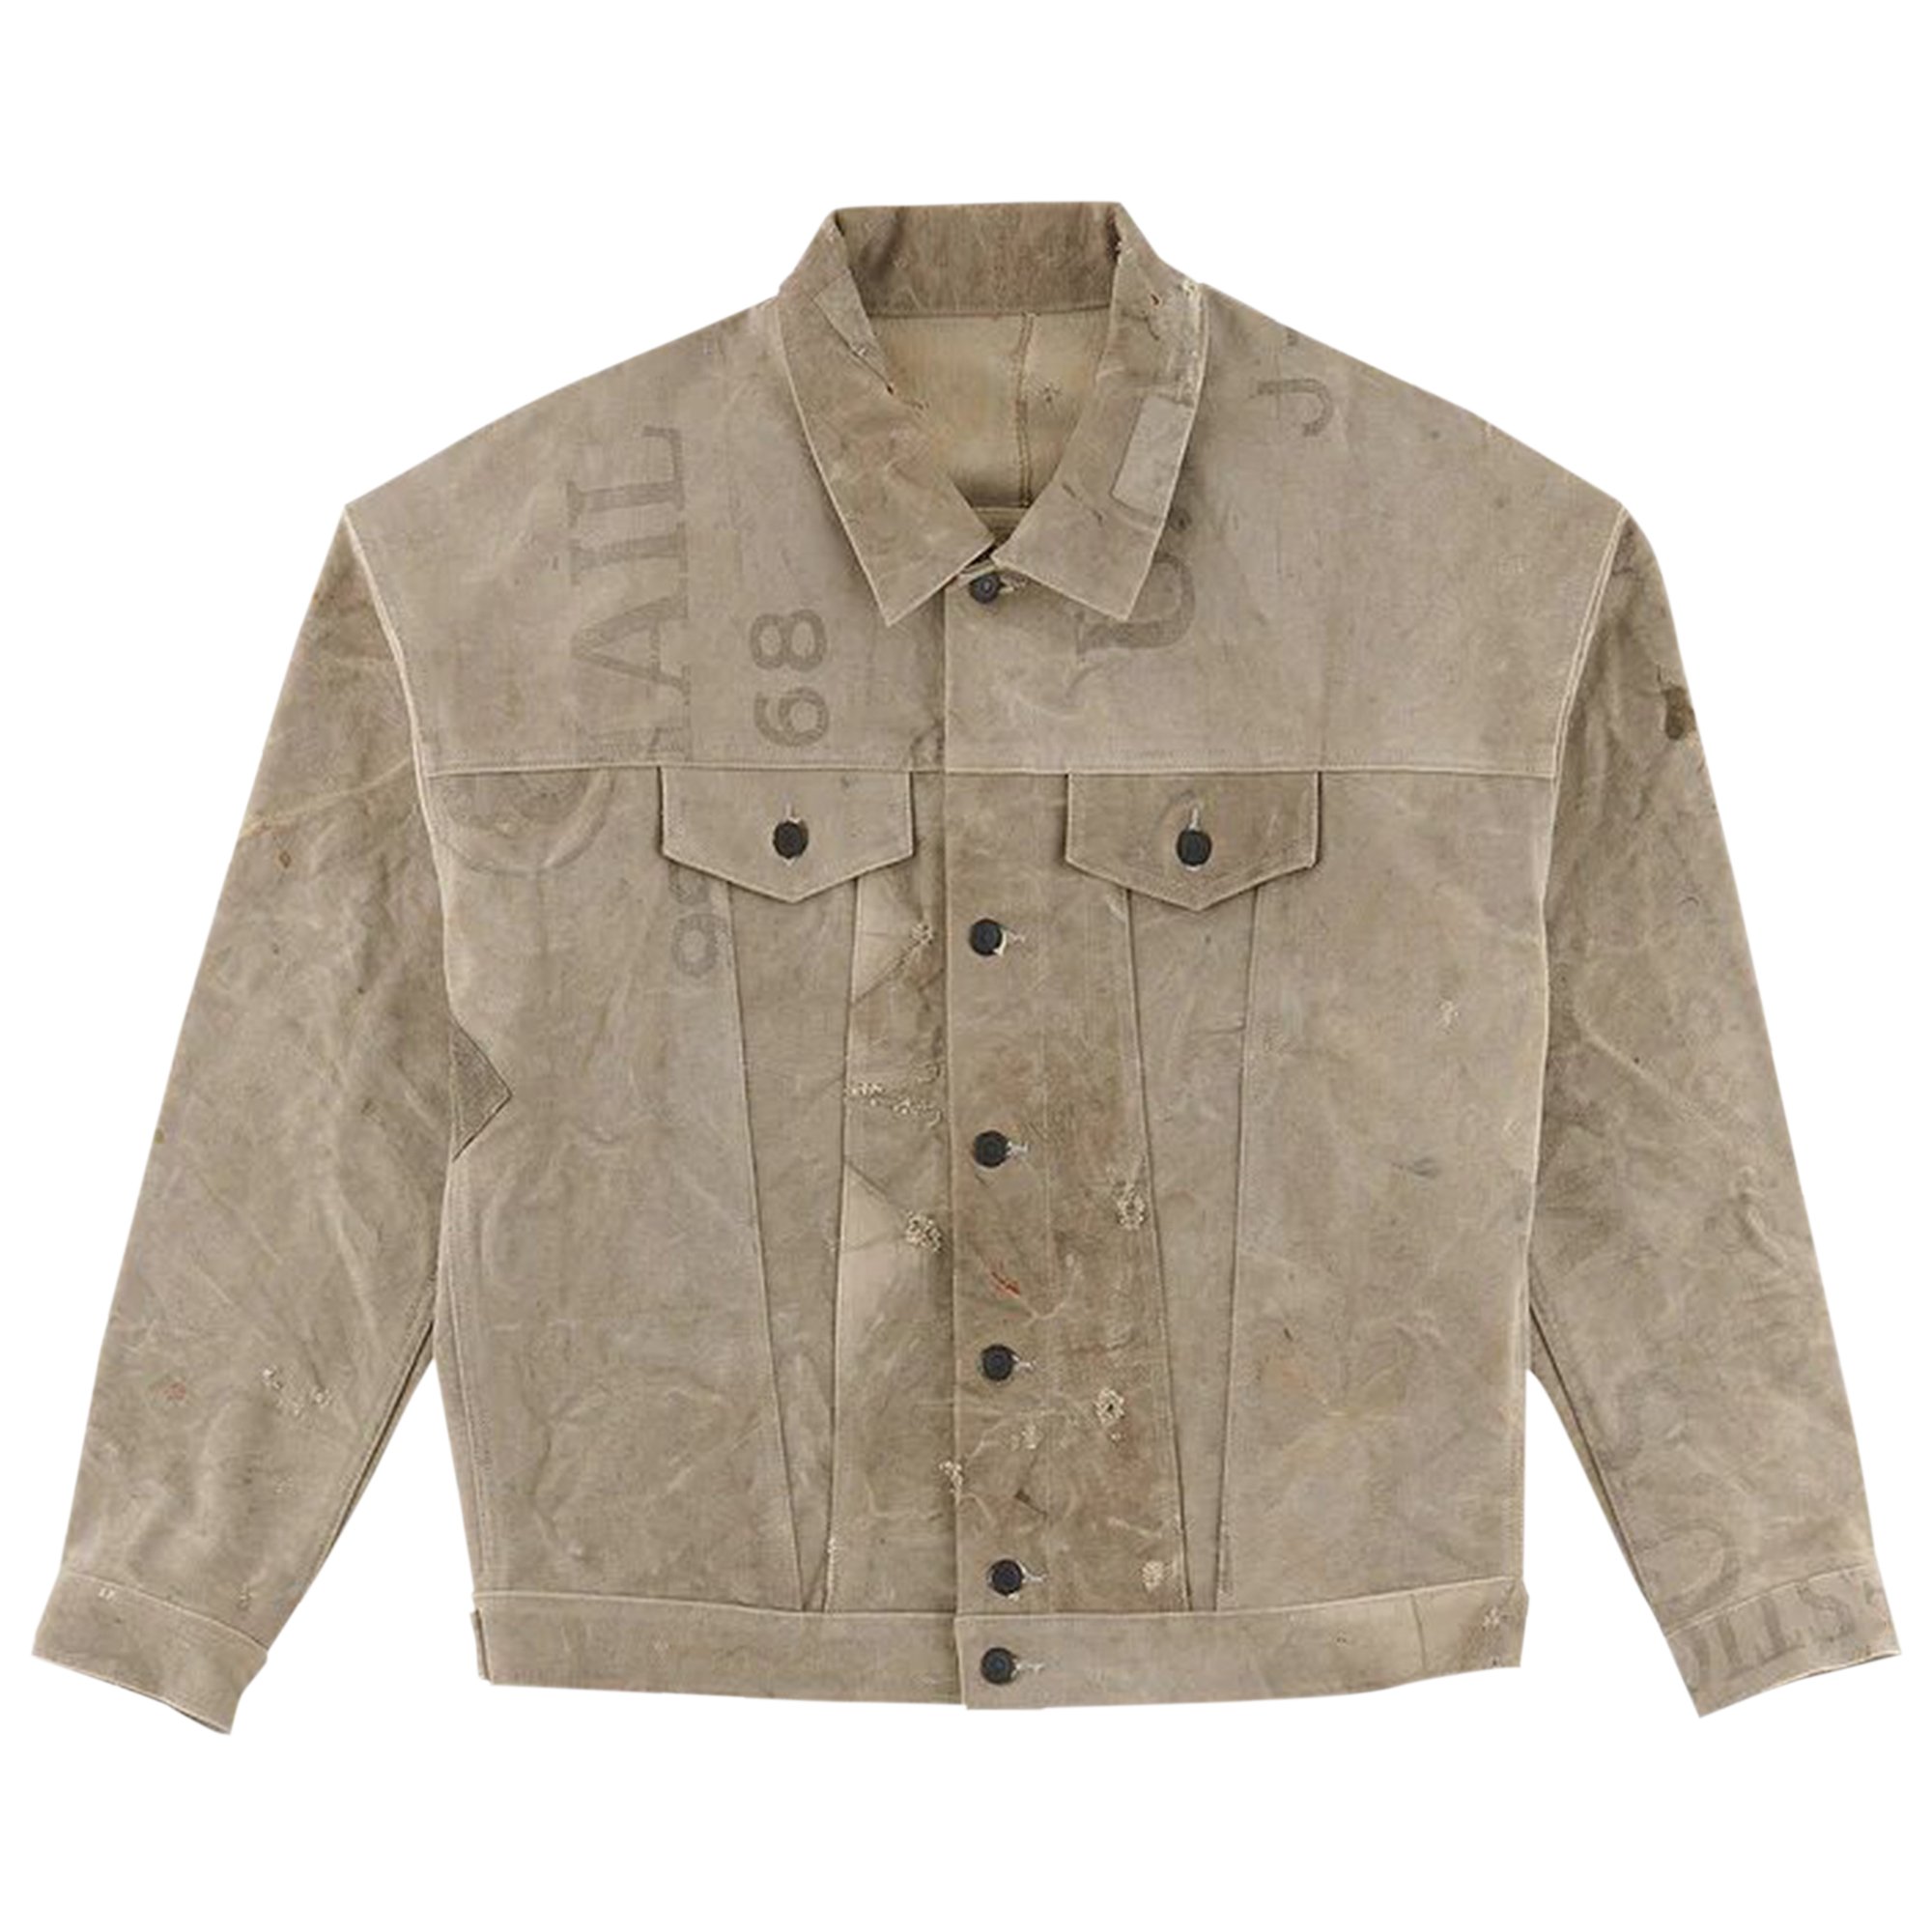 Buy Oversize Work Jacket 'White' - RE CO WH 00 00 33 | GOAT